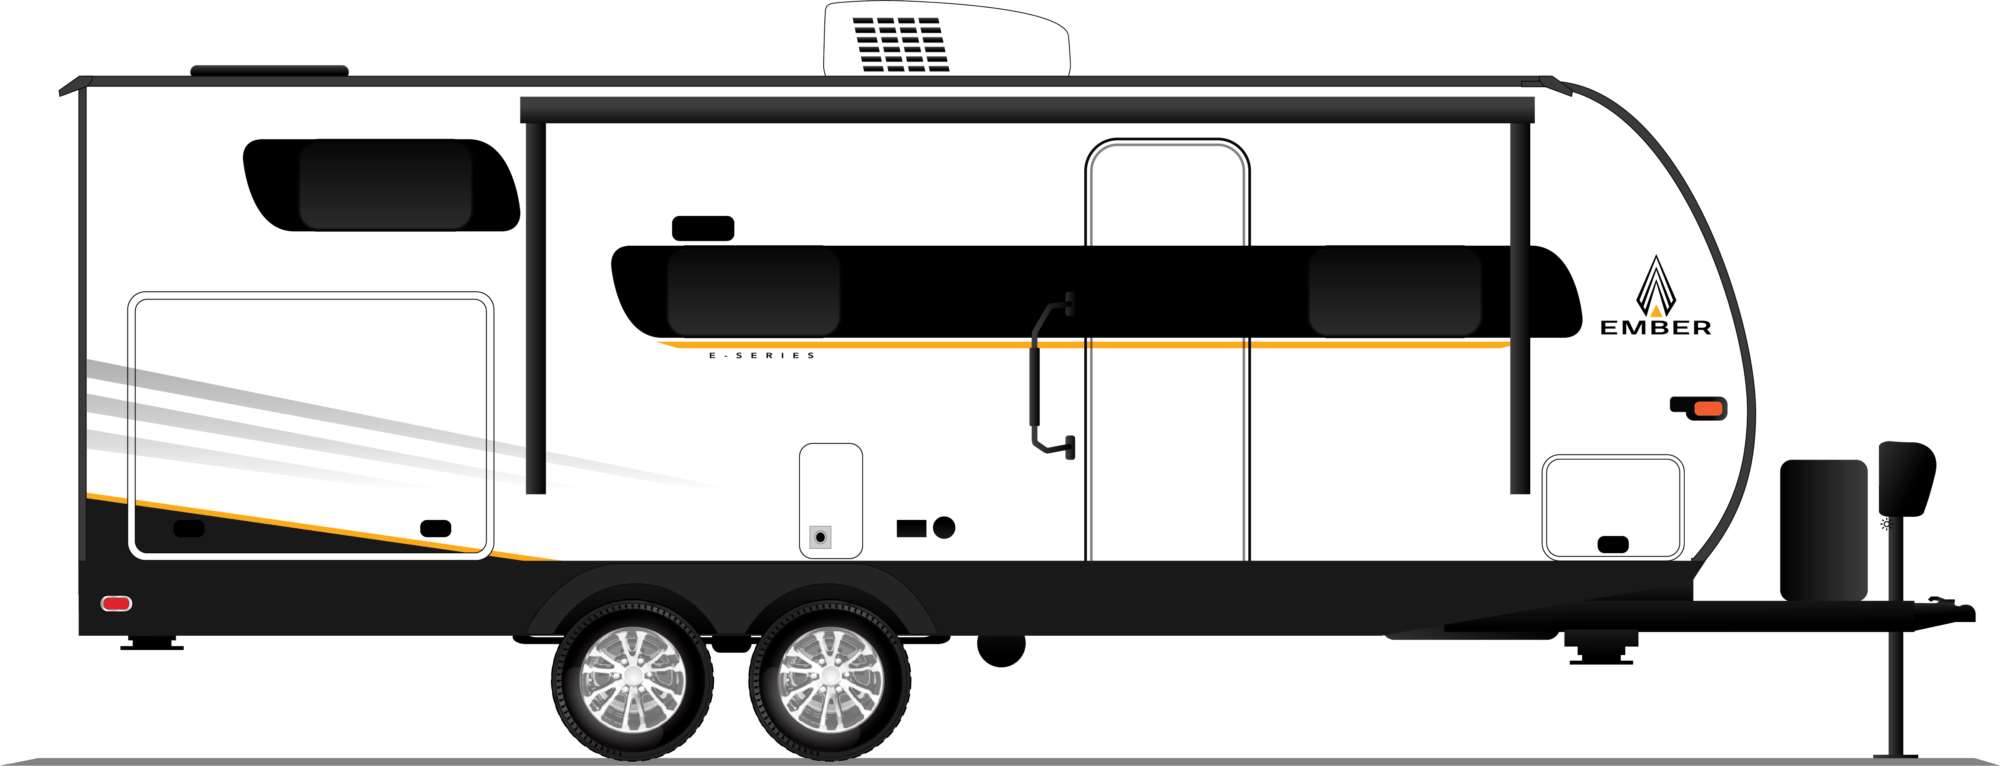 camper trailer travel trailer